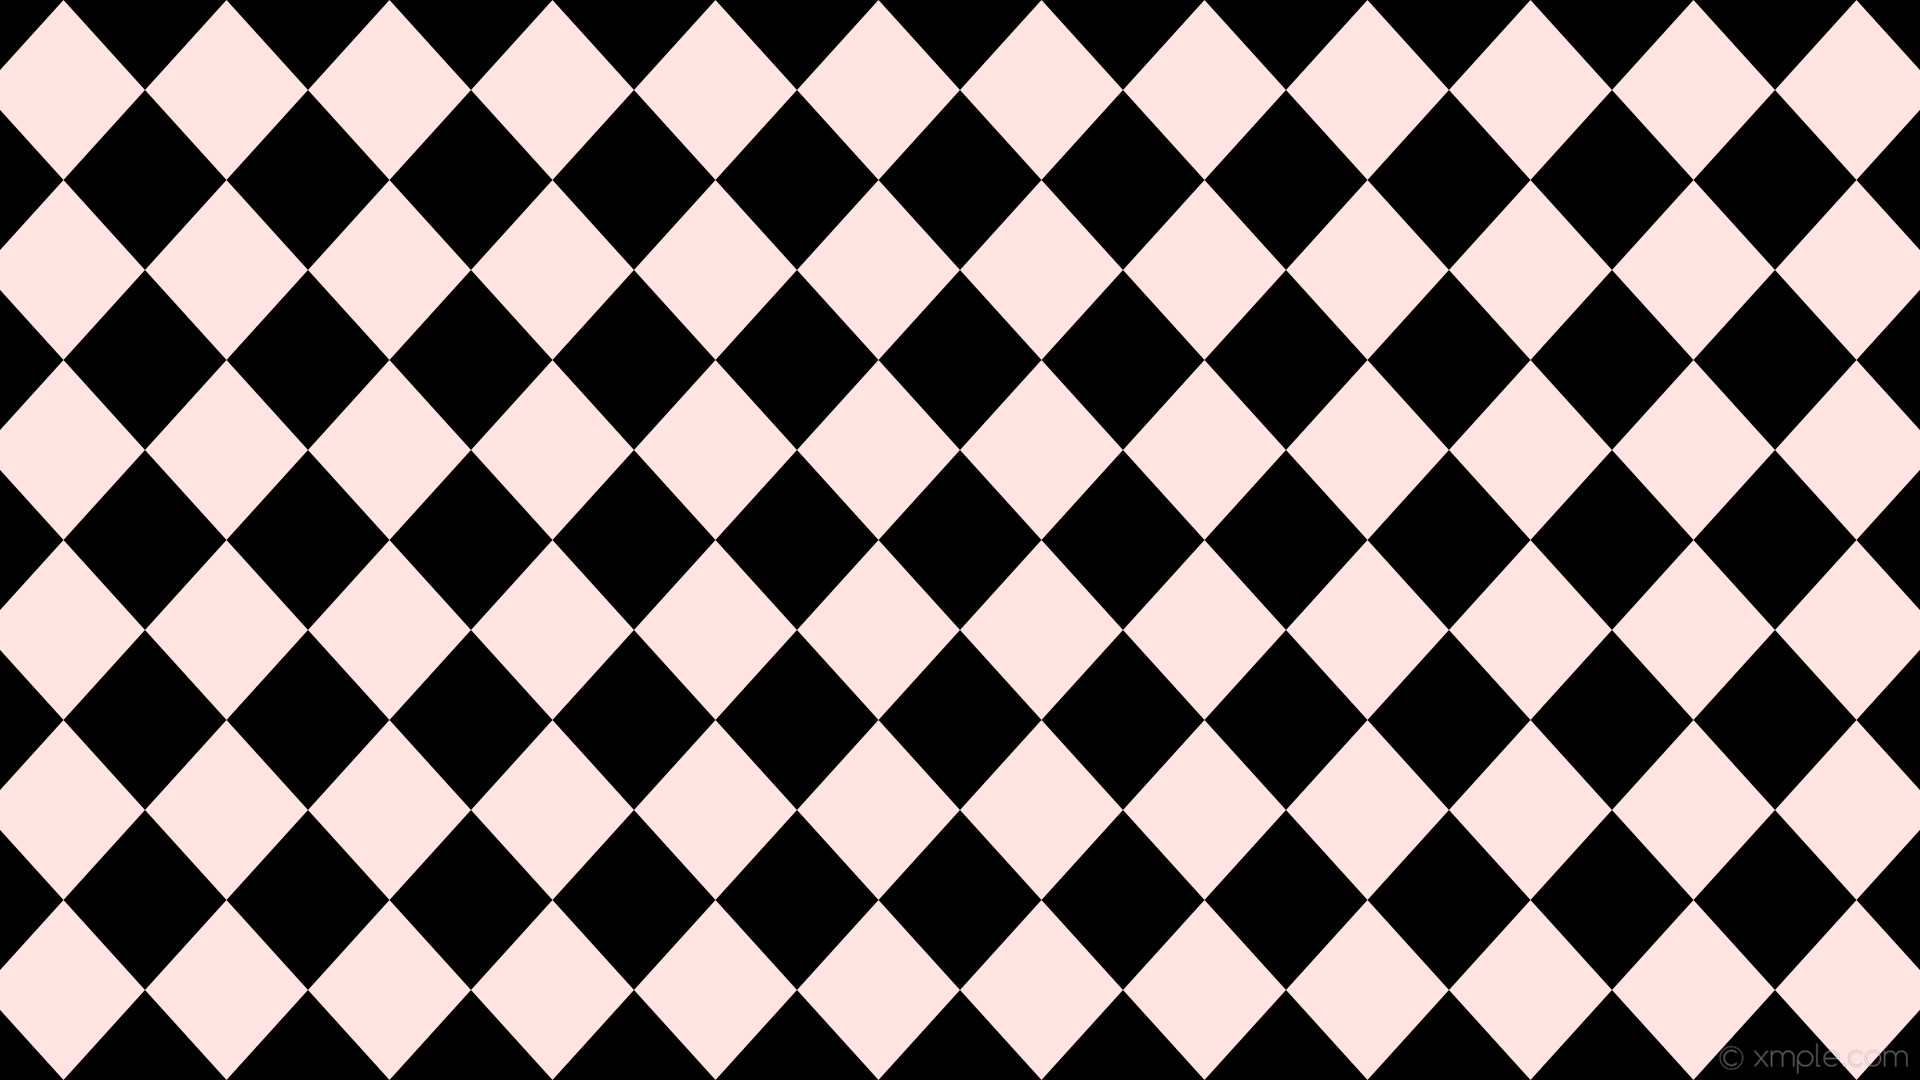 1920x1080 wallpaper rhombus black lozenge white diamond misty rose #000000 #ffe4e1  90Â° 180px 163px